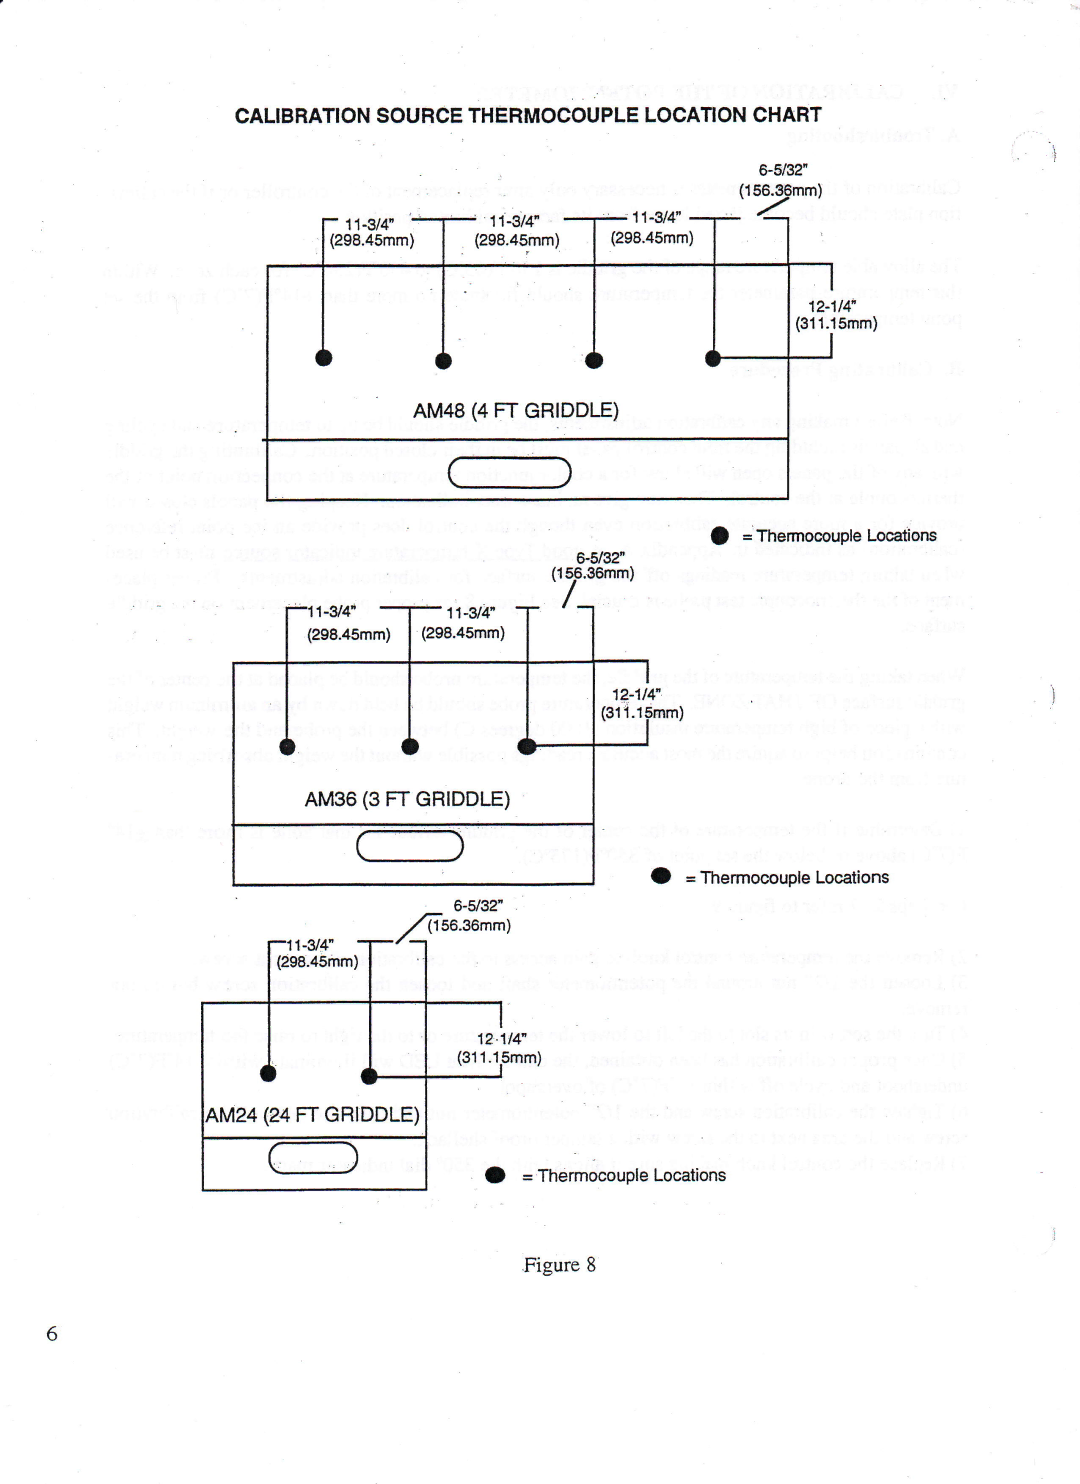 Toastmaster AM24, AM48 manual Calibrationsourcethermocouplelocationchart, AM363 FT Grtddle, 24FTGRIDDLE 